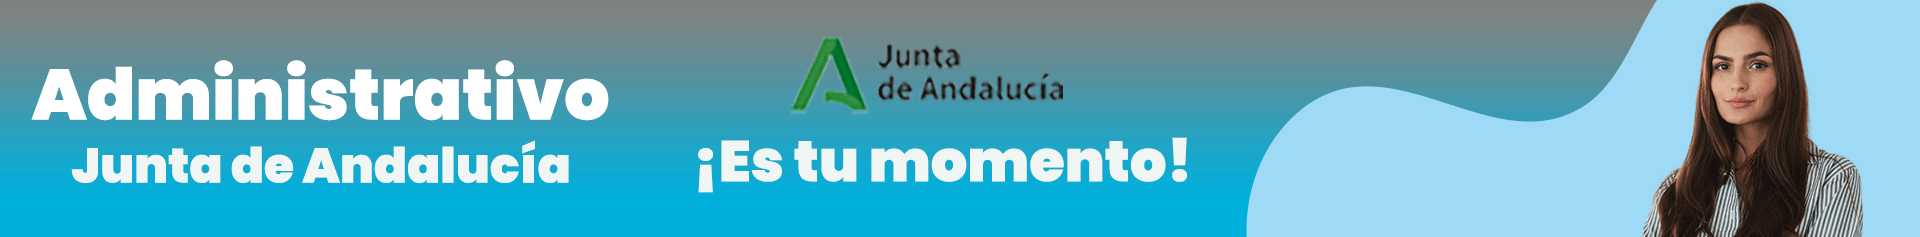 Administrativo-de-la-junta-de-Andalucía